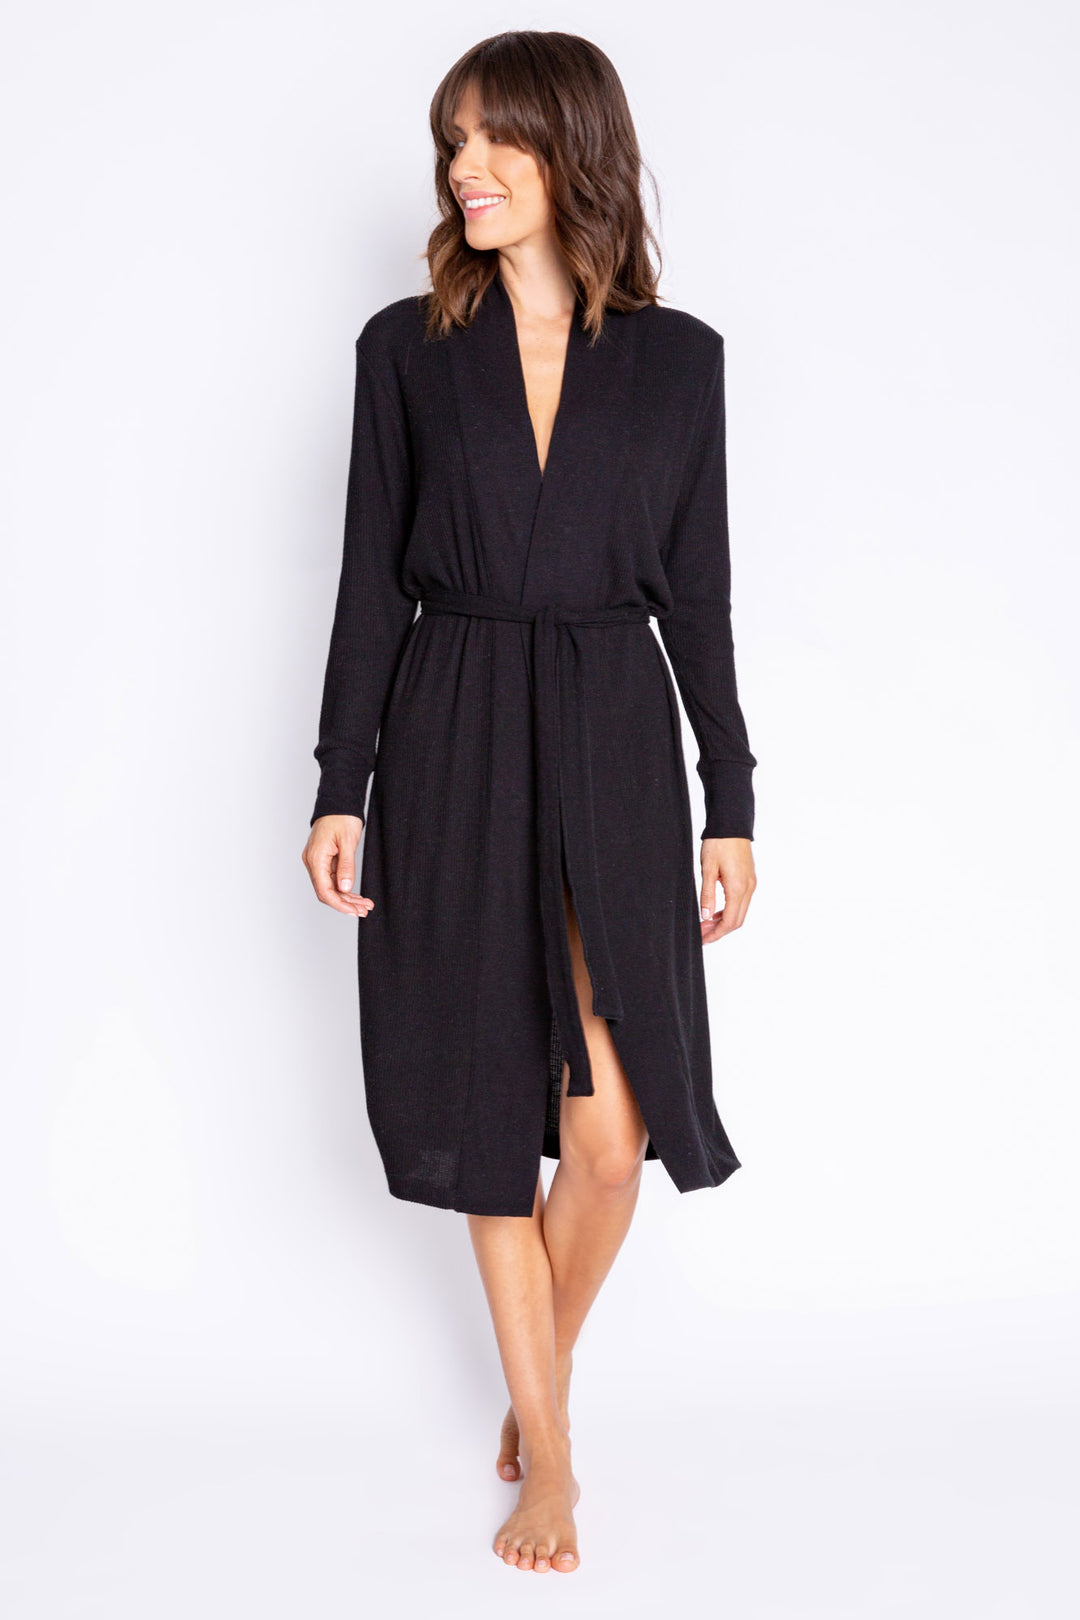 Women's Classic Black Robe – P.J. Salvage